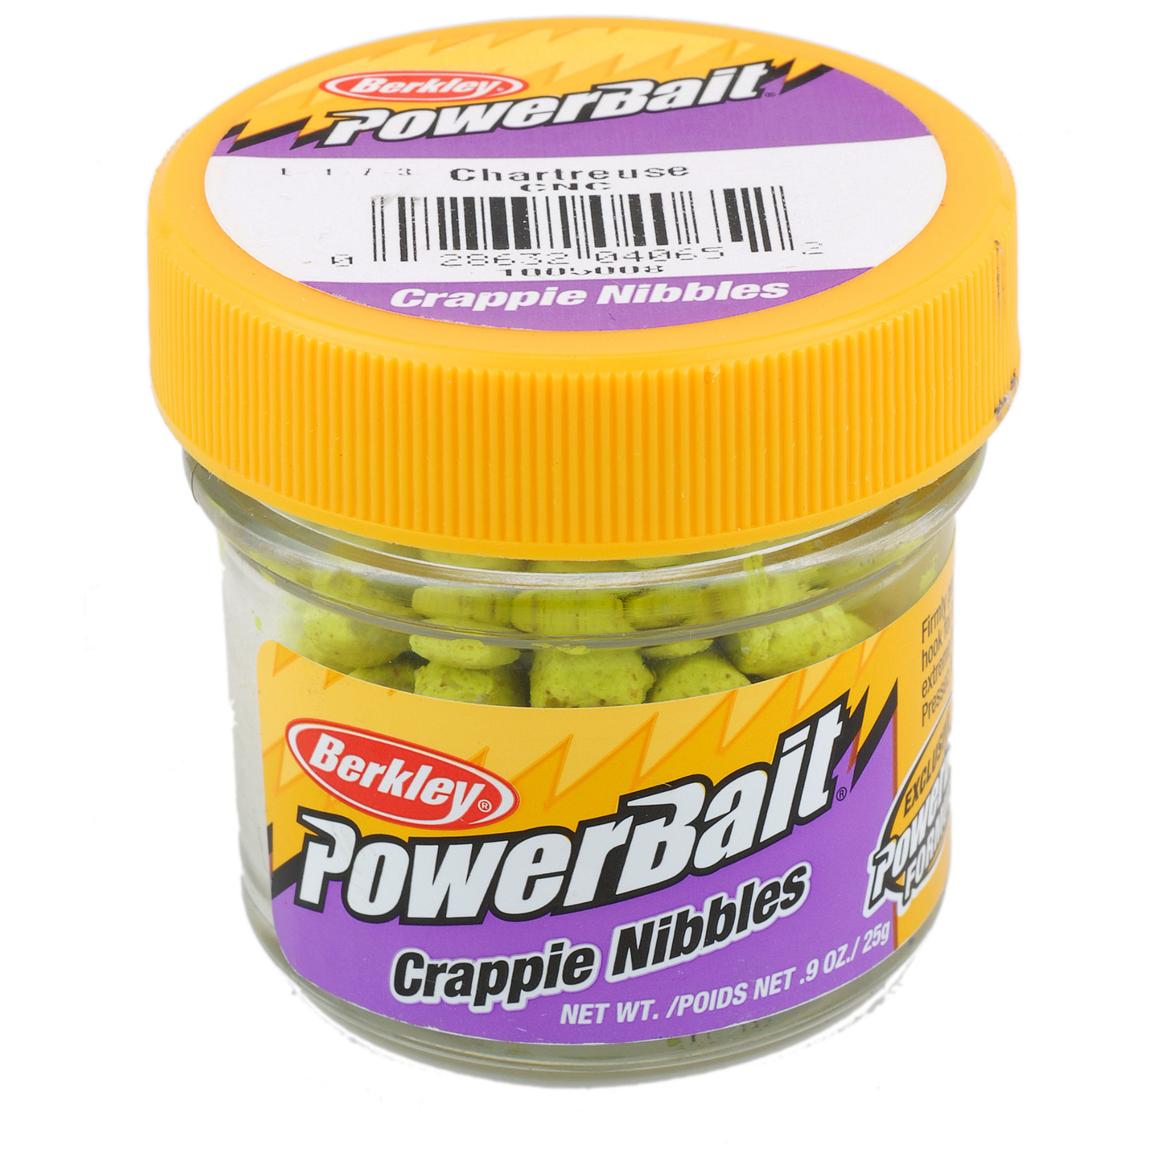 berkley-powerbait-crappie-nibble-bait-1-1-oz-jar-425051-soft